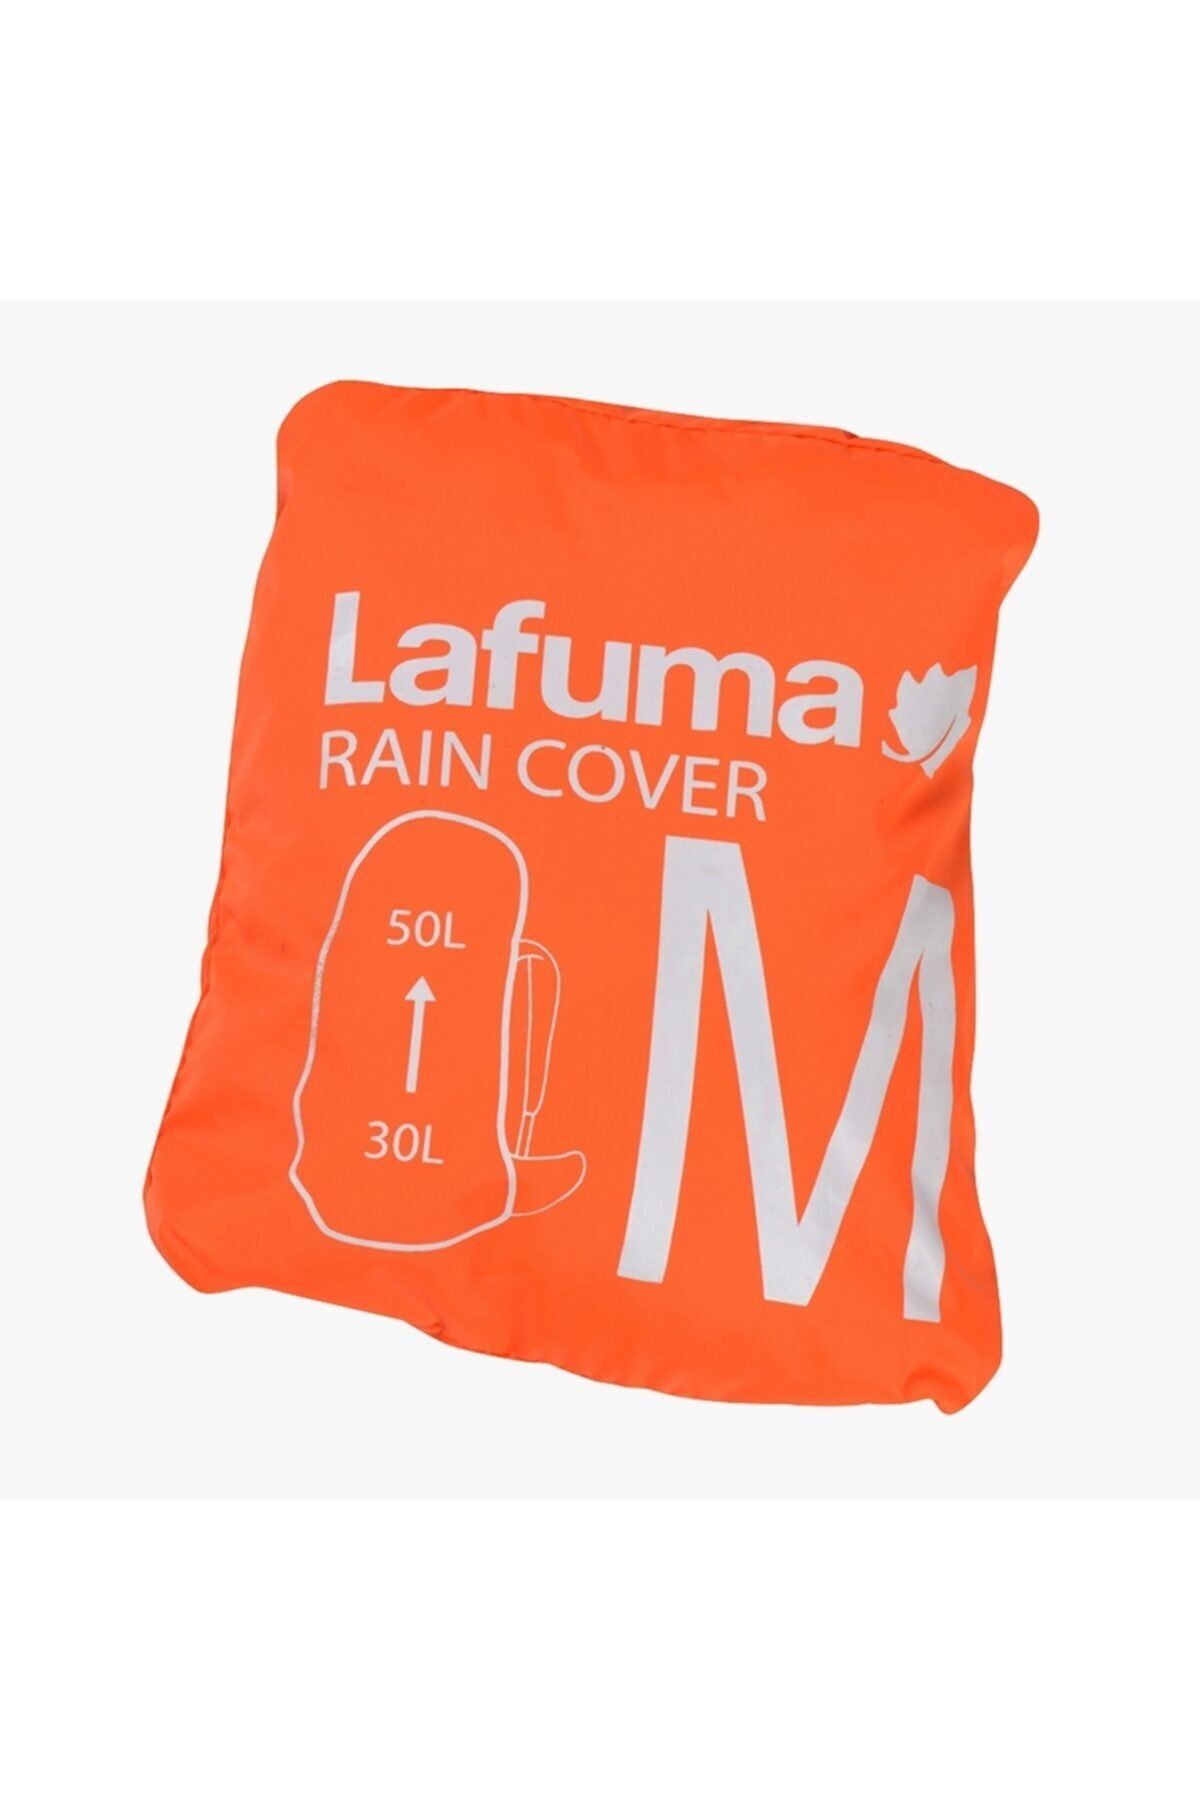 Lafuma Rain Cover Medium Orta Boy Çanta Yağmurluğu Lfs6139